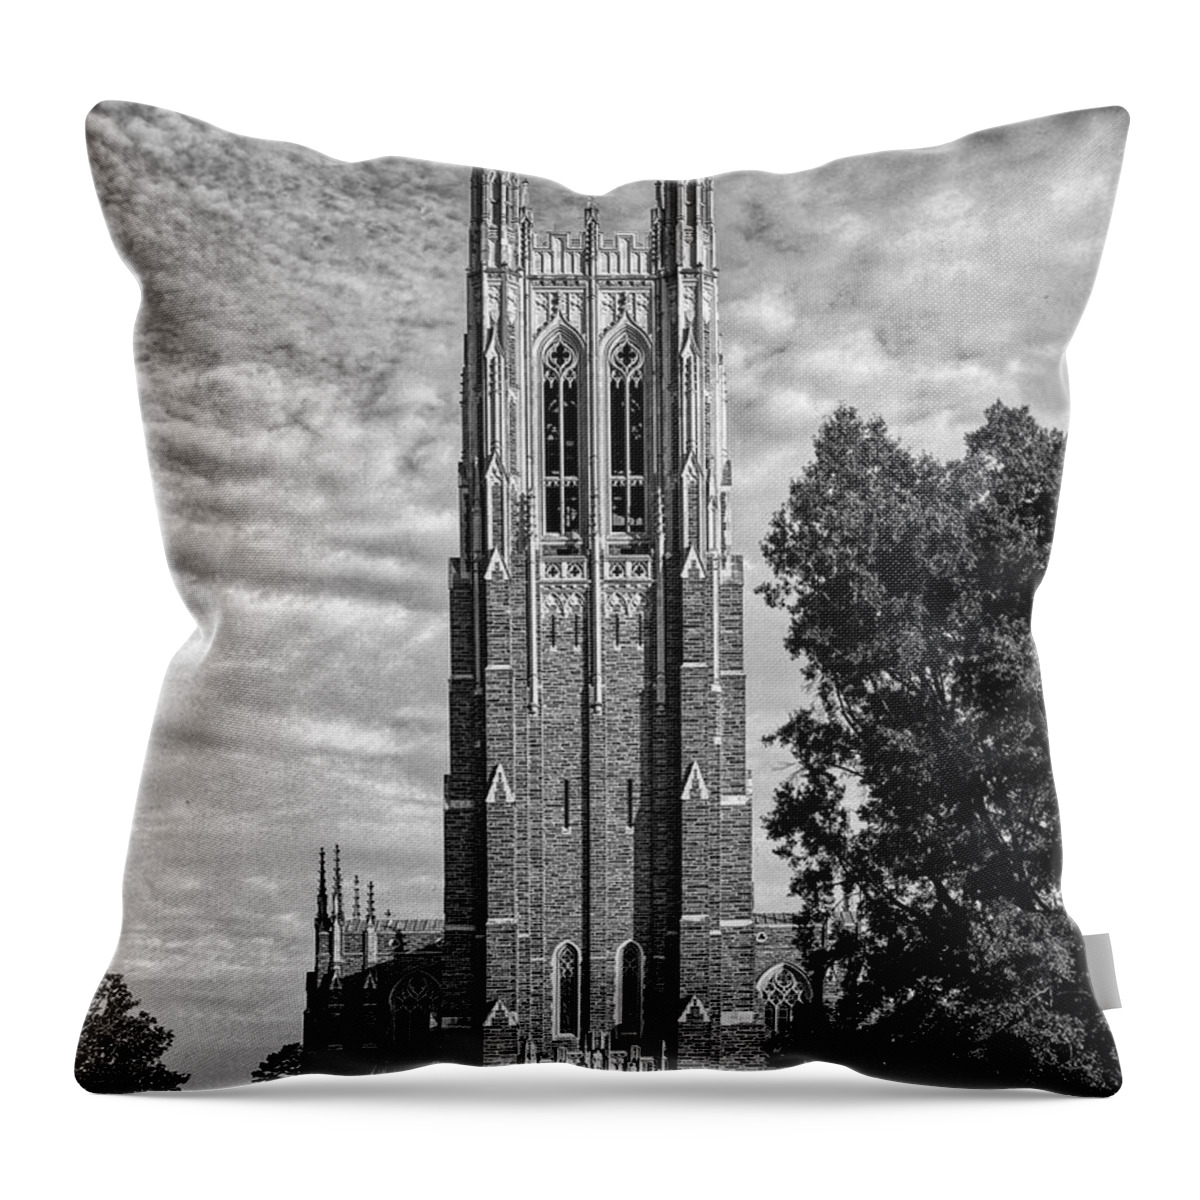 Duke University Throw Pillow featuring the photograph Duke University Chapel #3 by Mountain Dreams